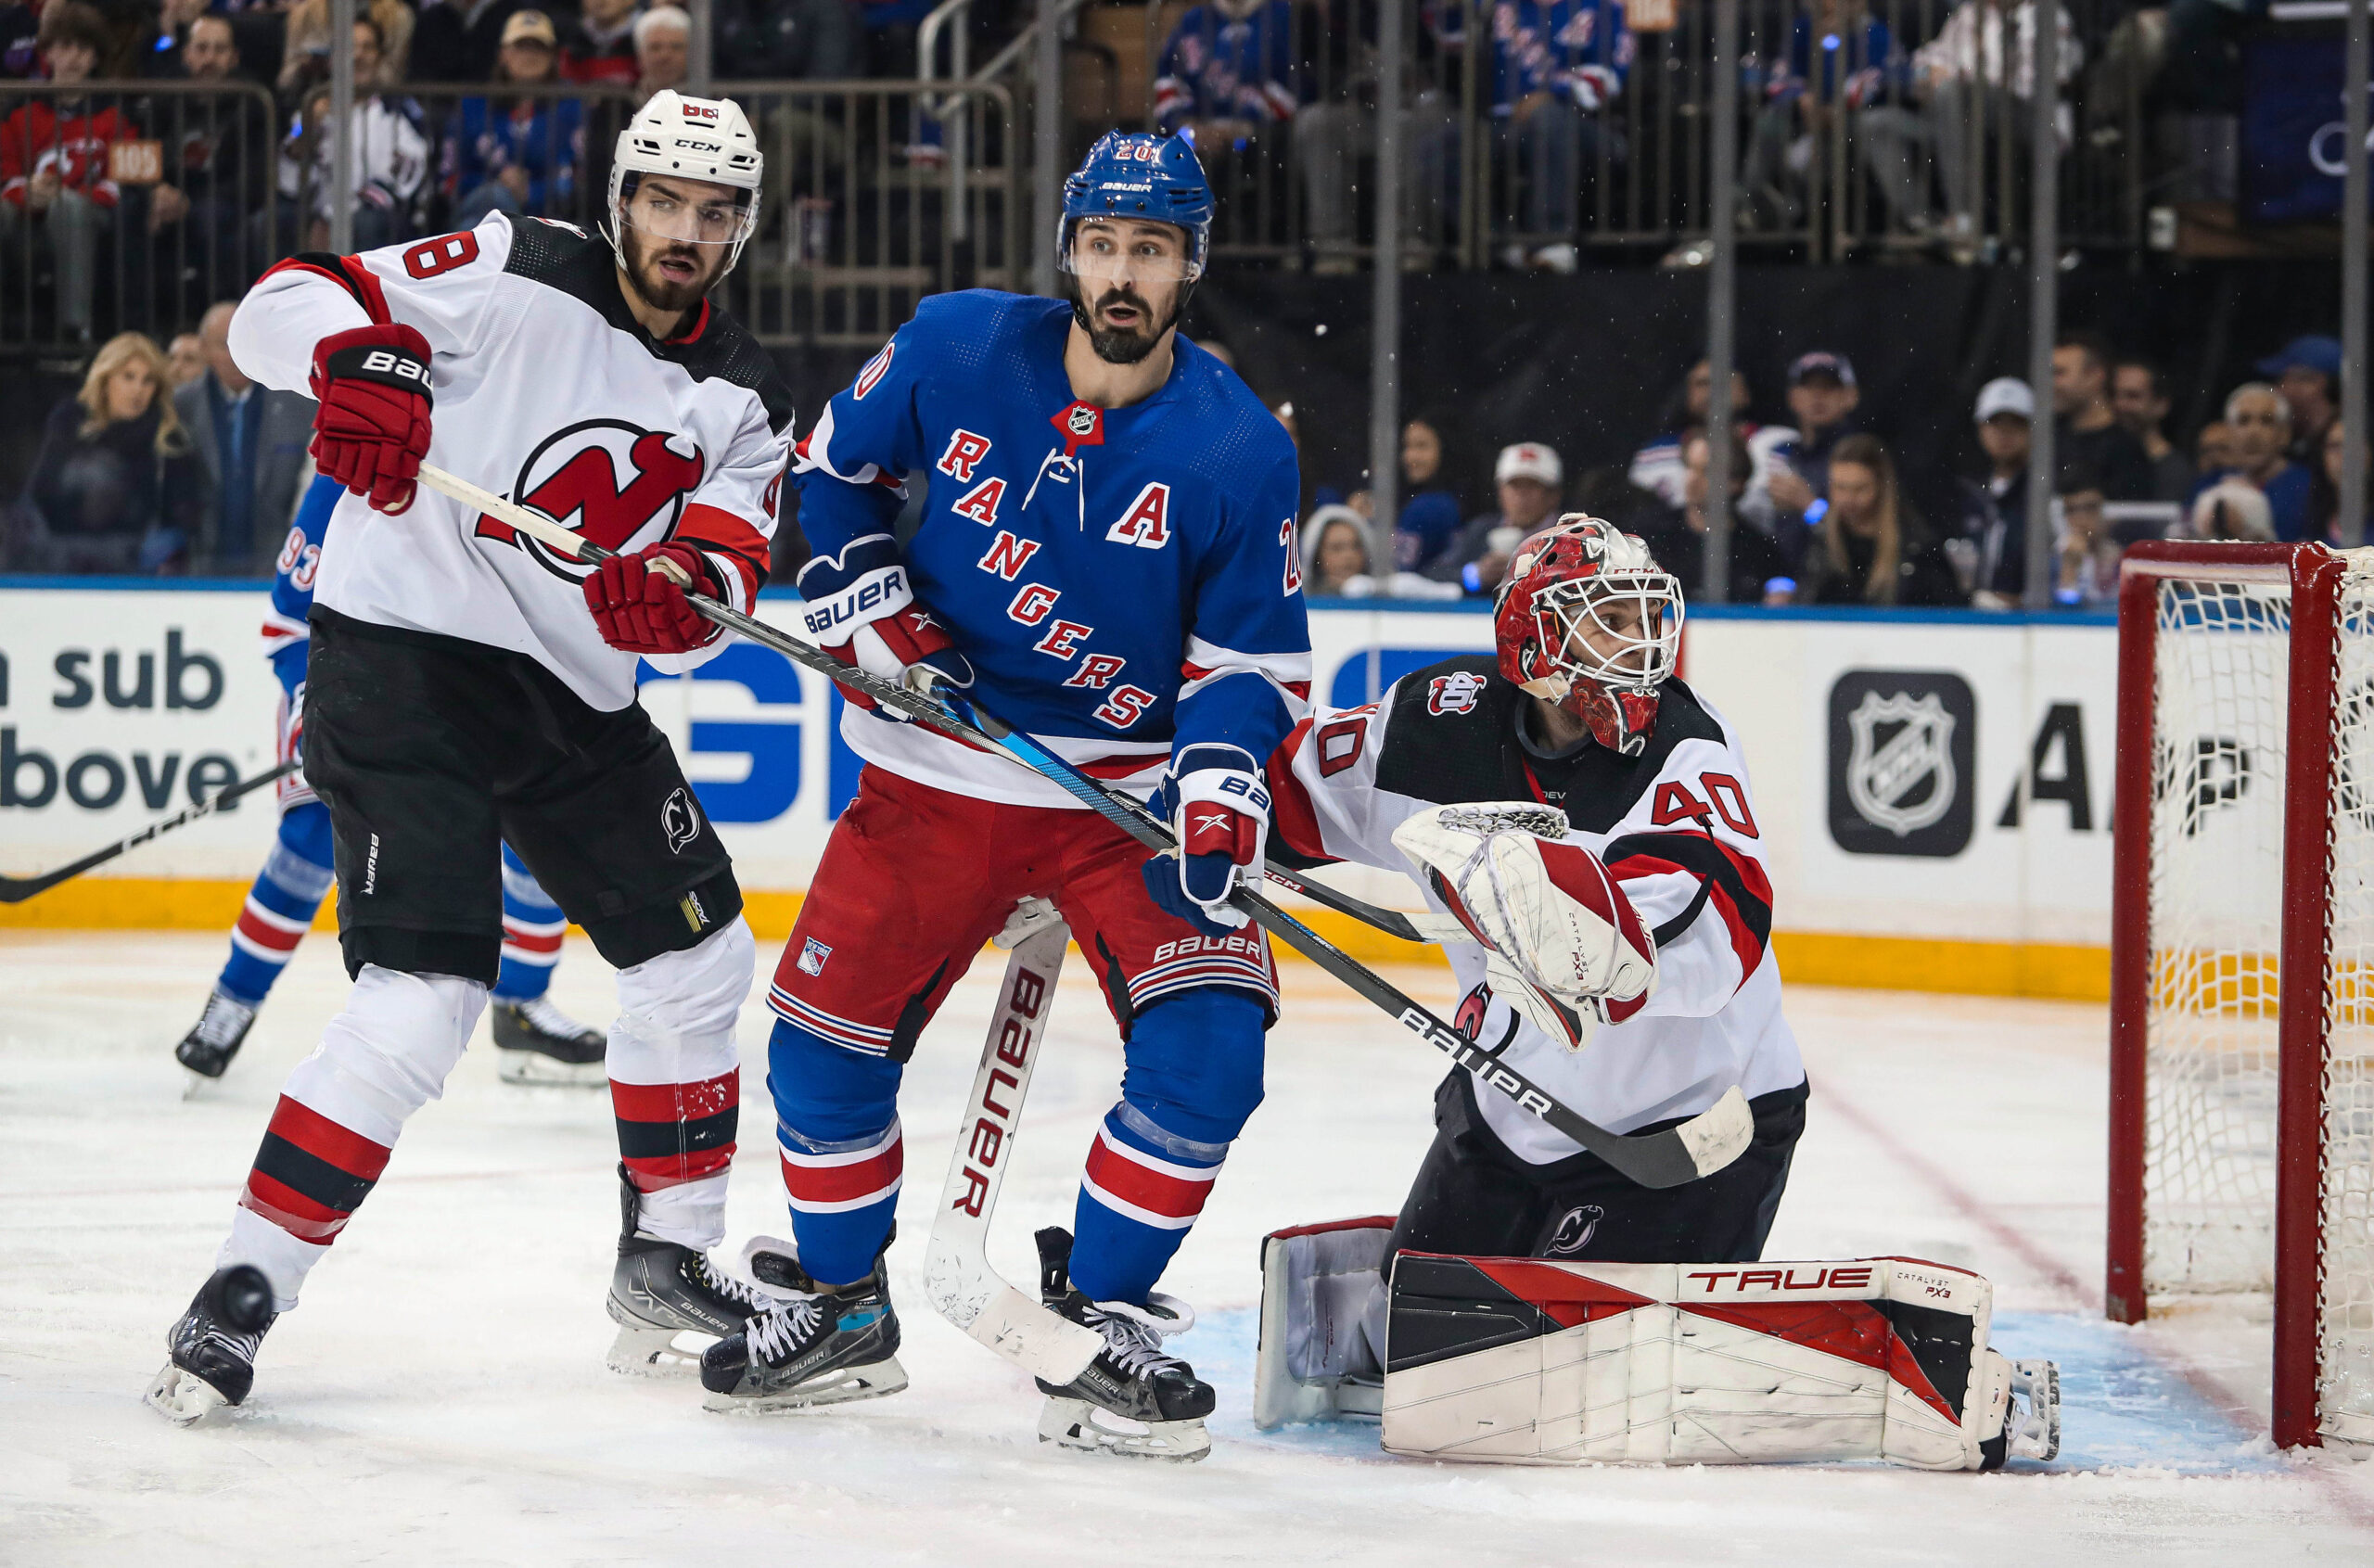 New York Rangers vs. New Jersey Devils: How to watch, stream NHL Preseason  